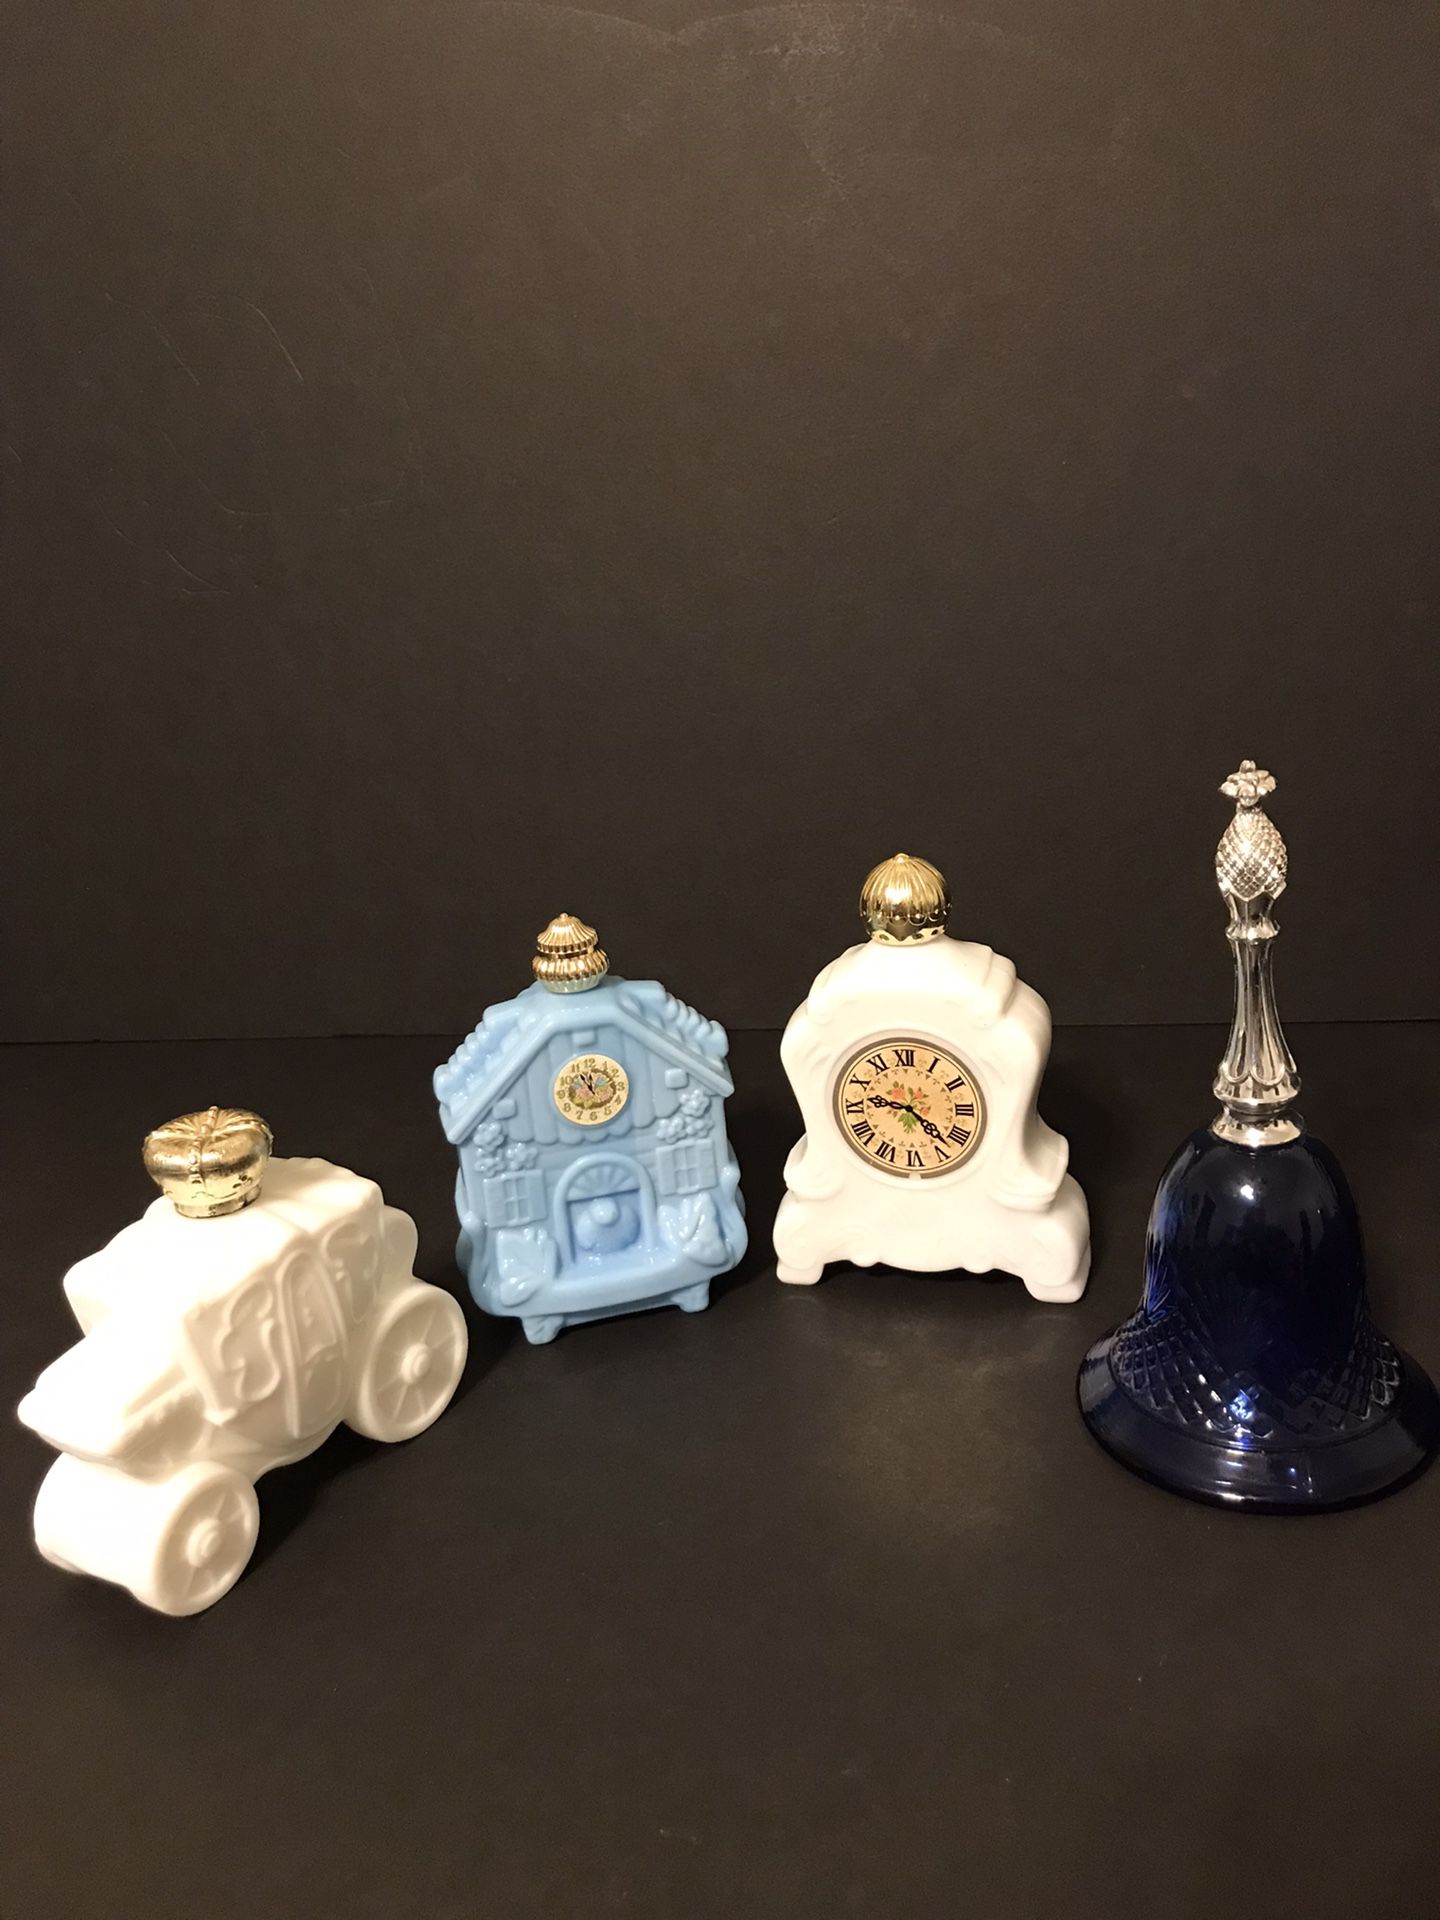 4 Vintage Avon Fairytale Bottles- 2 Large Clocks, 1 Stagecoach, 1 Blue Bell